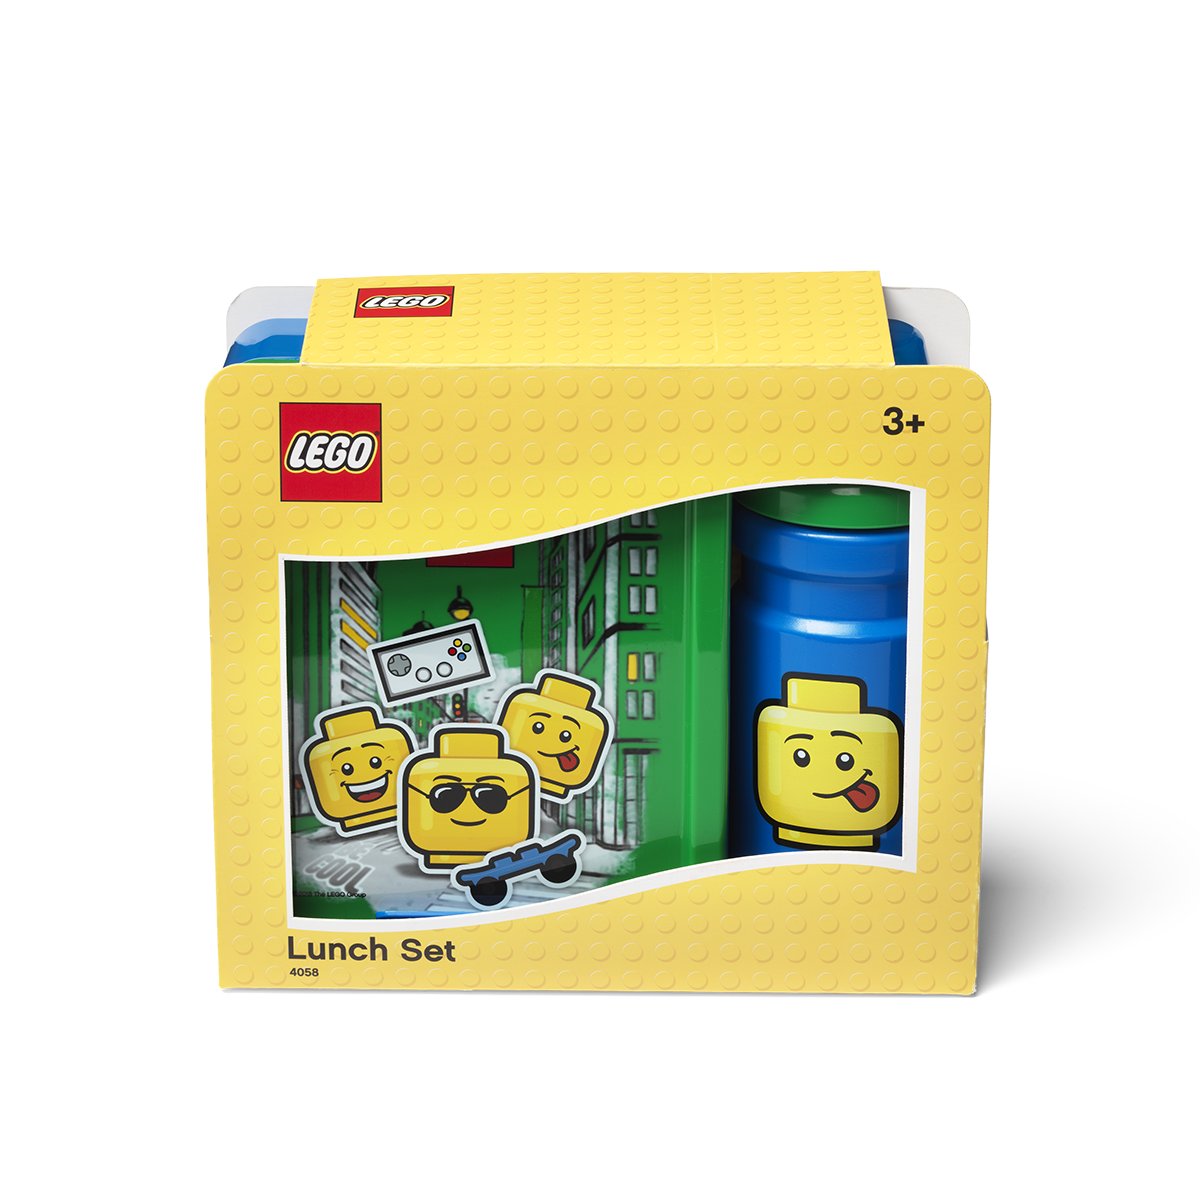 LEGO LEGO Lunch Set Iconic Boy 40581724